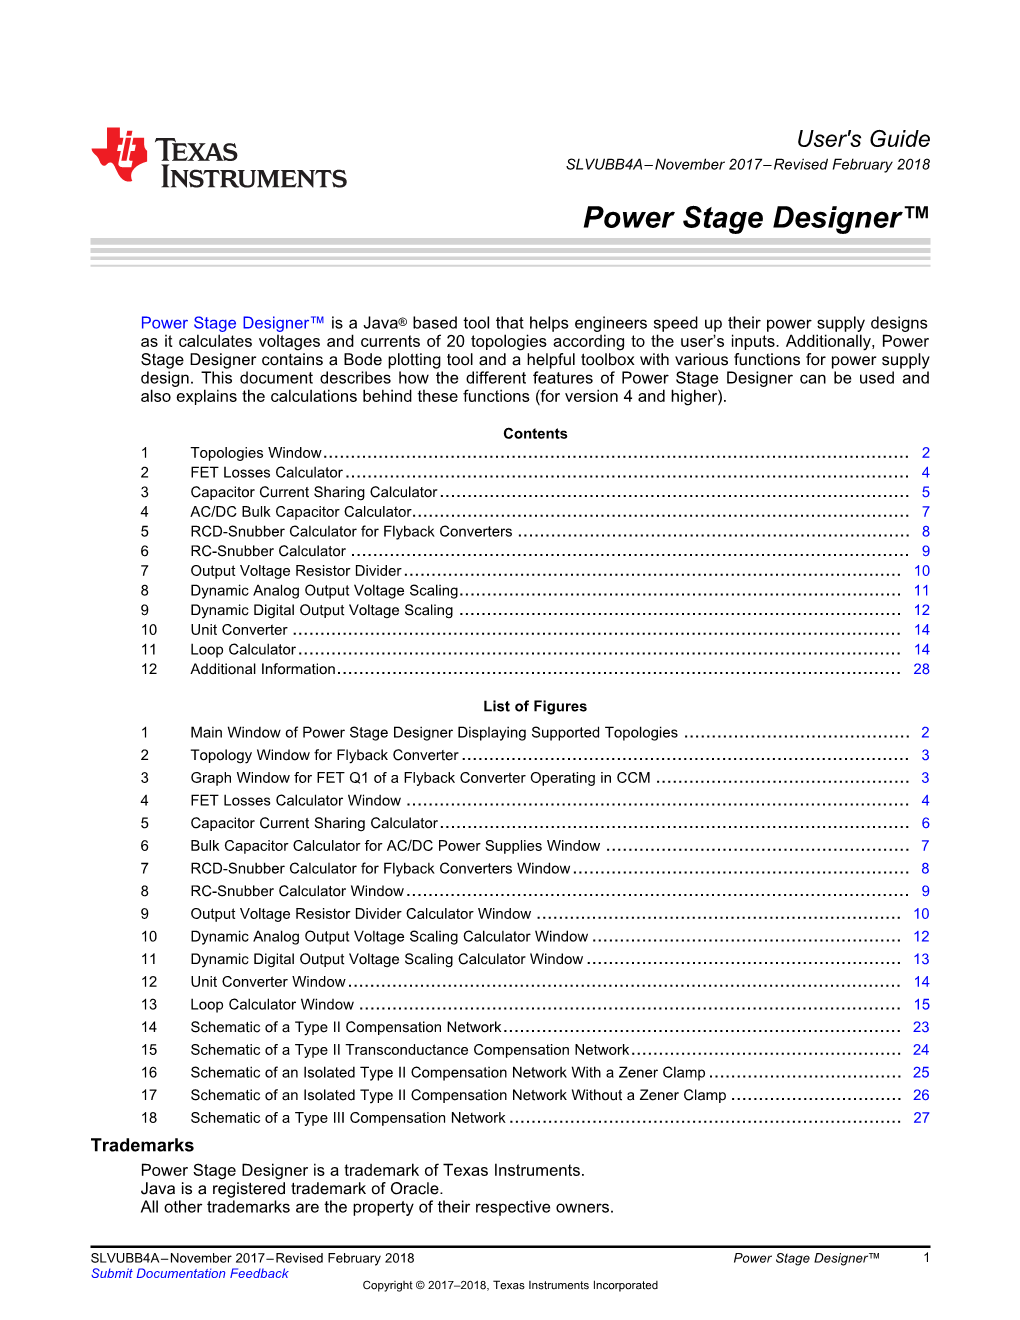 Power Stage Designer User's Guide (Rev. A)